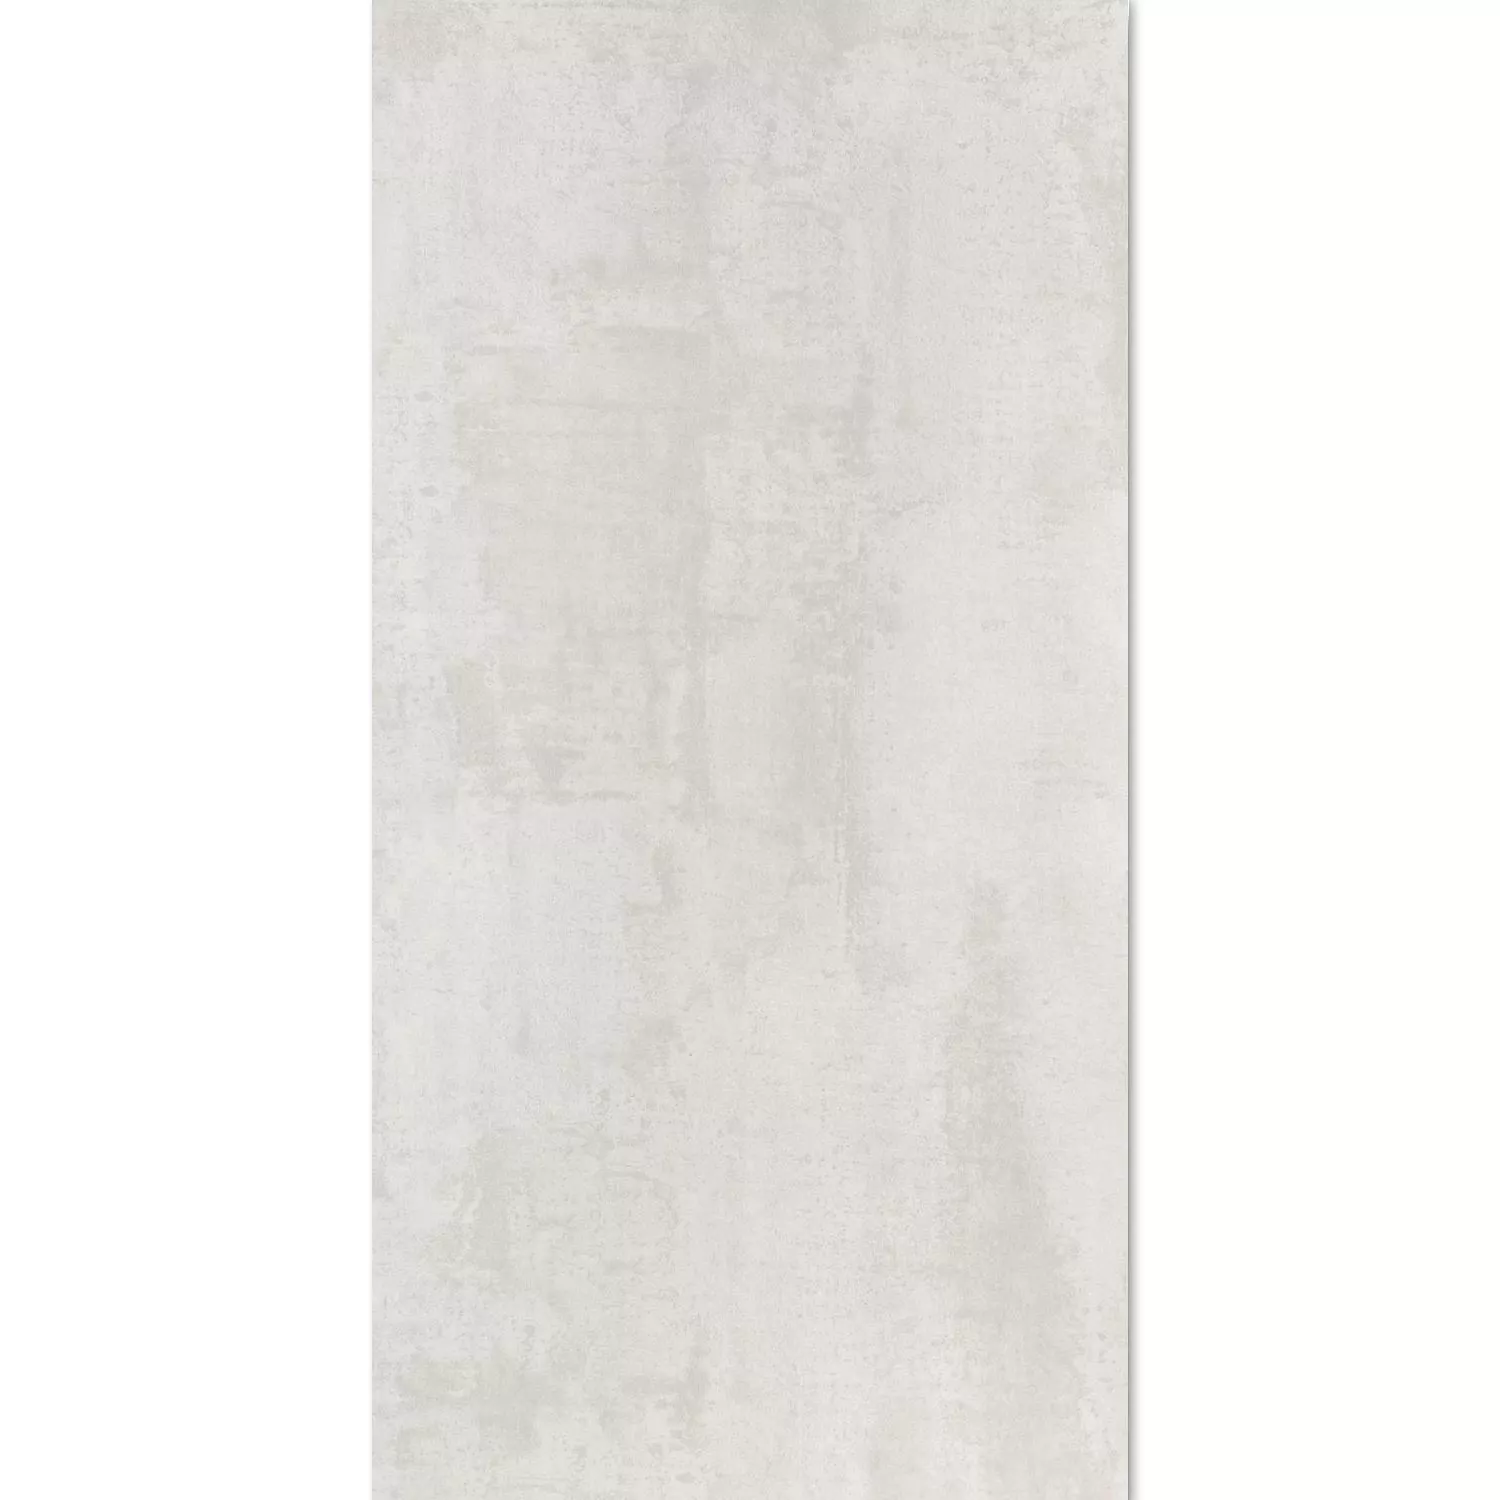 Muster Bodenfliesen Herion Metalloptik Lappato Blanco 45x90cm